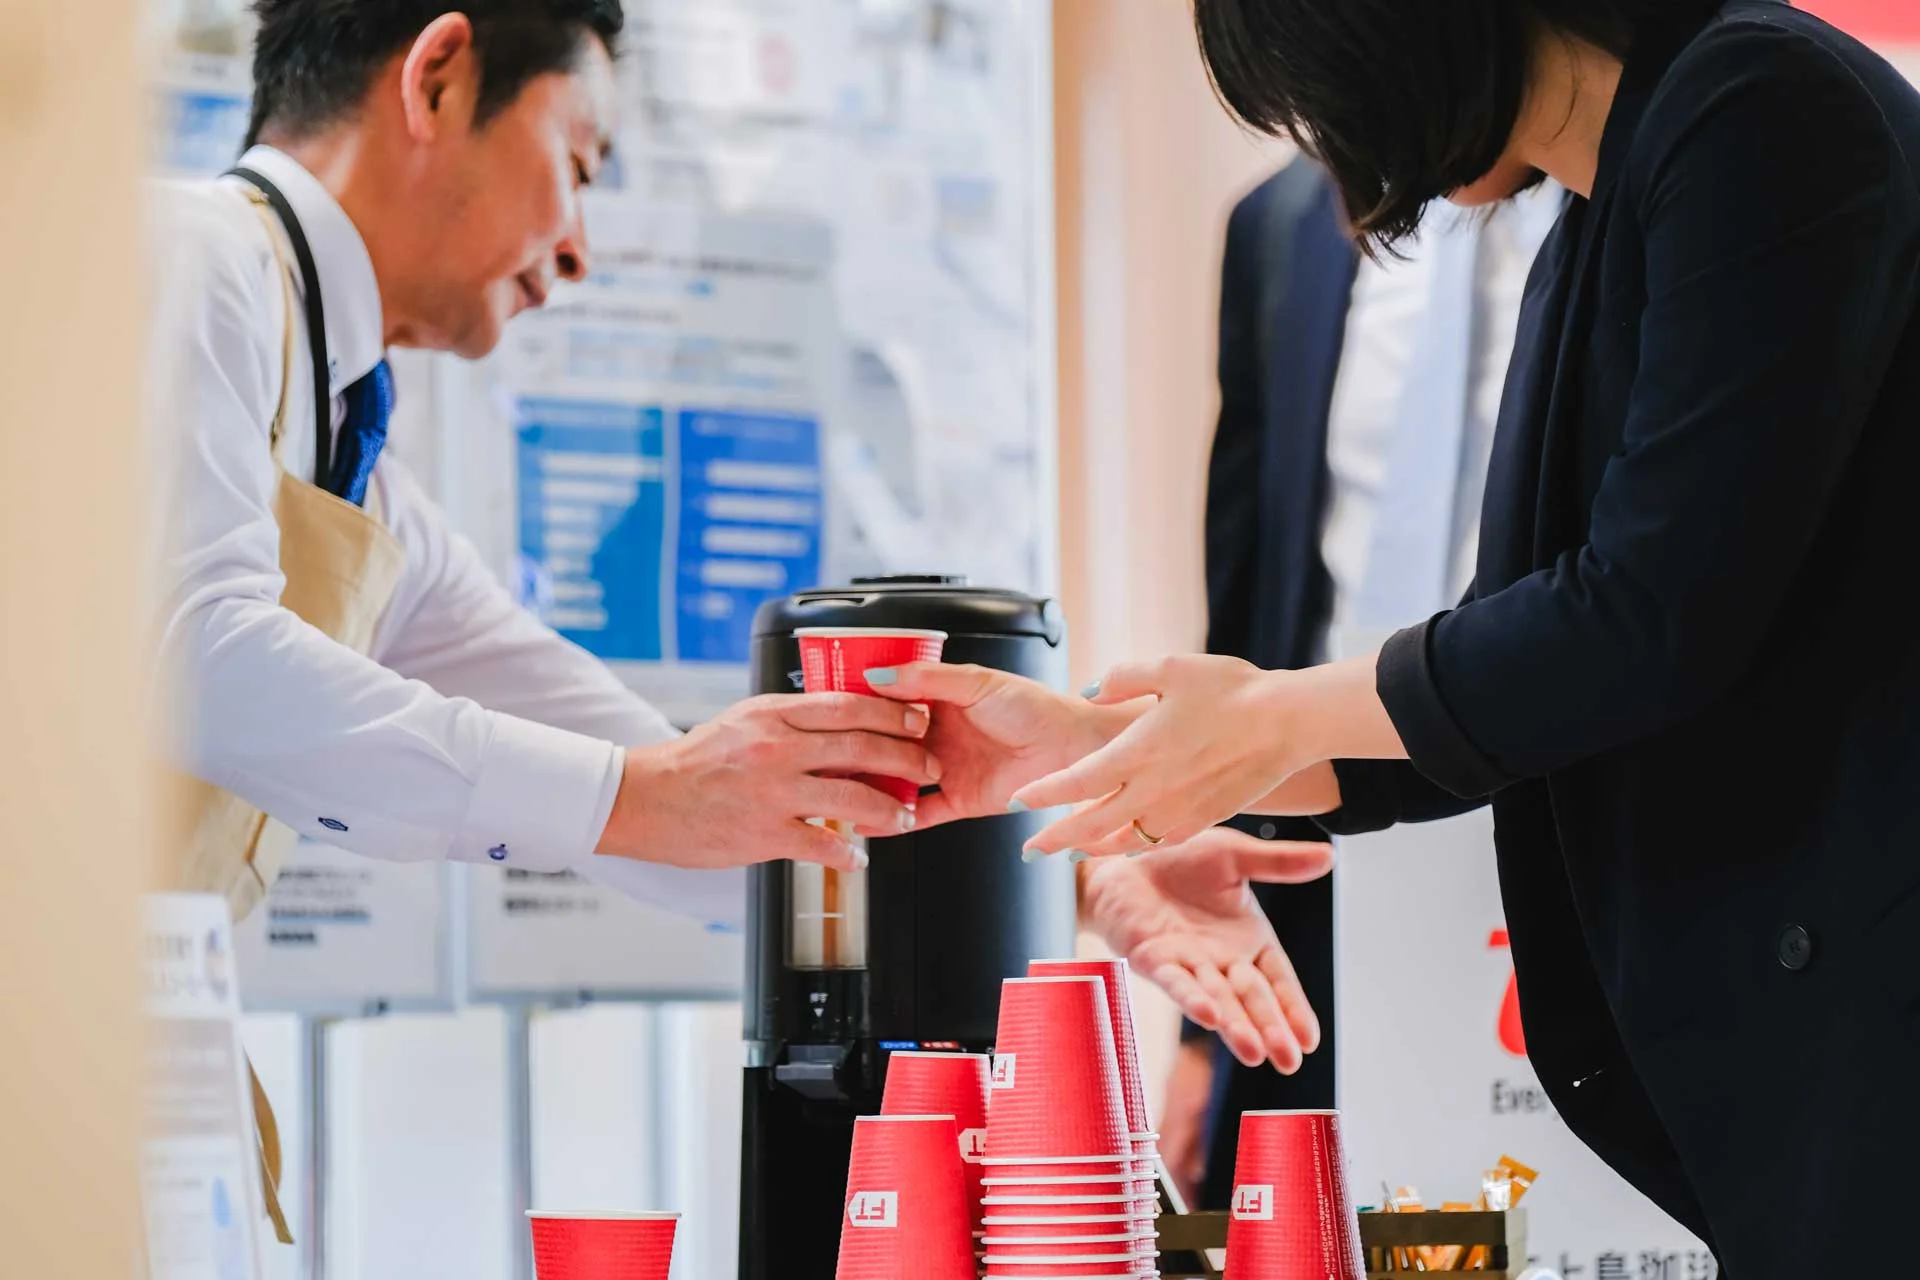 UCC上島珈琲株式会社からは、水素で焙煎したコーヒー『水素焙煎コーヒー』がふるまわれた。